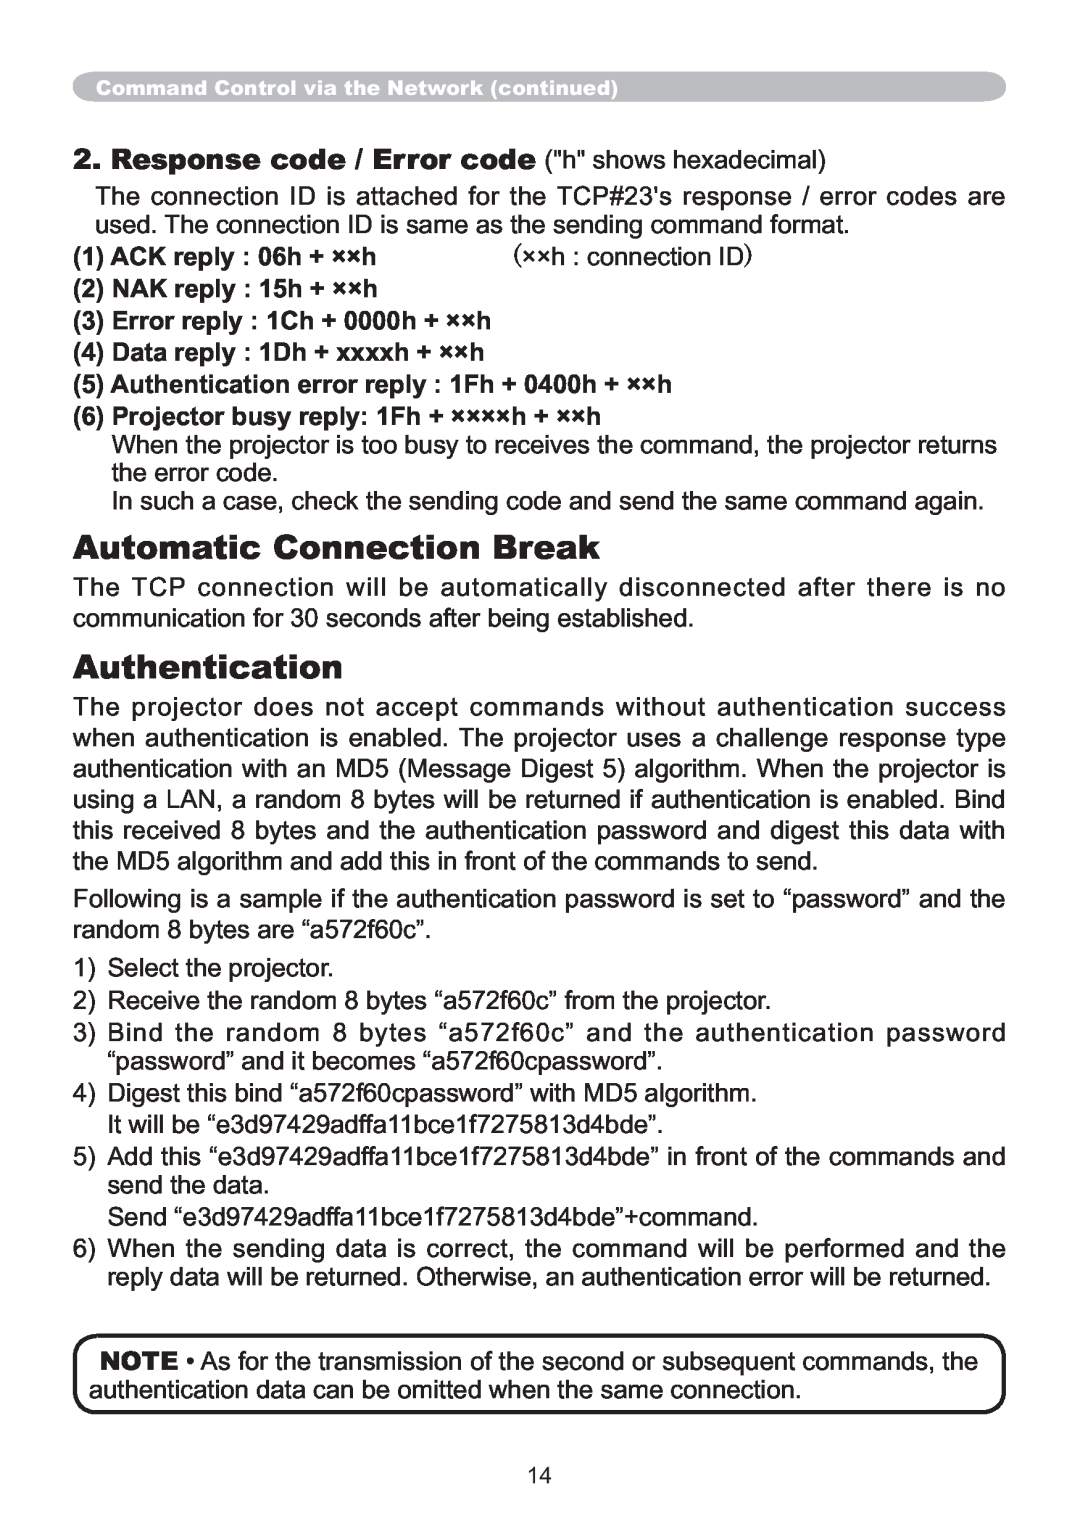 Hitachi IPJ-AW250N user manual Automatic Connection Break, Authentication, Response code / Error code h shows hexadecimal 